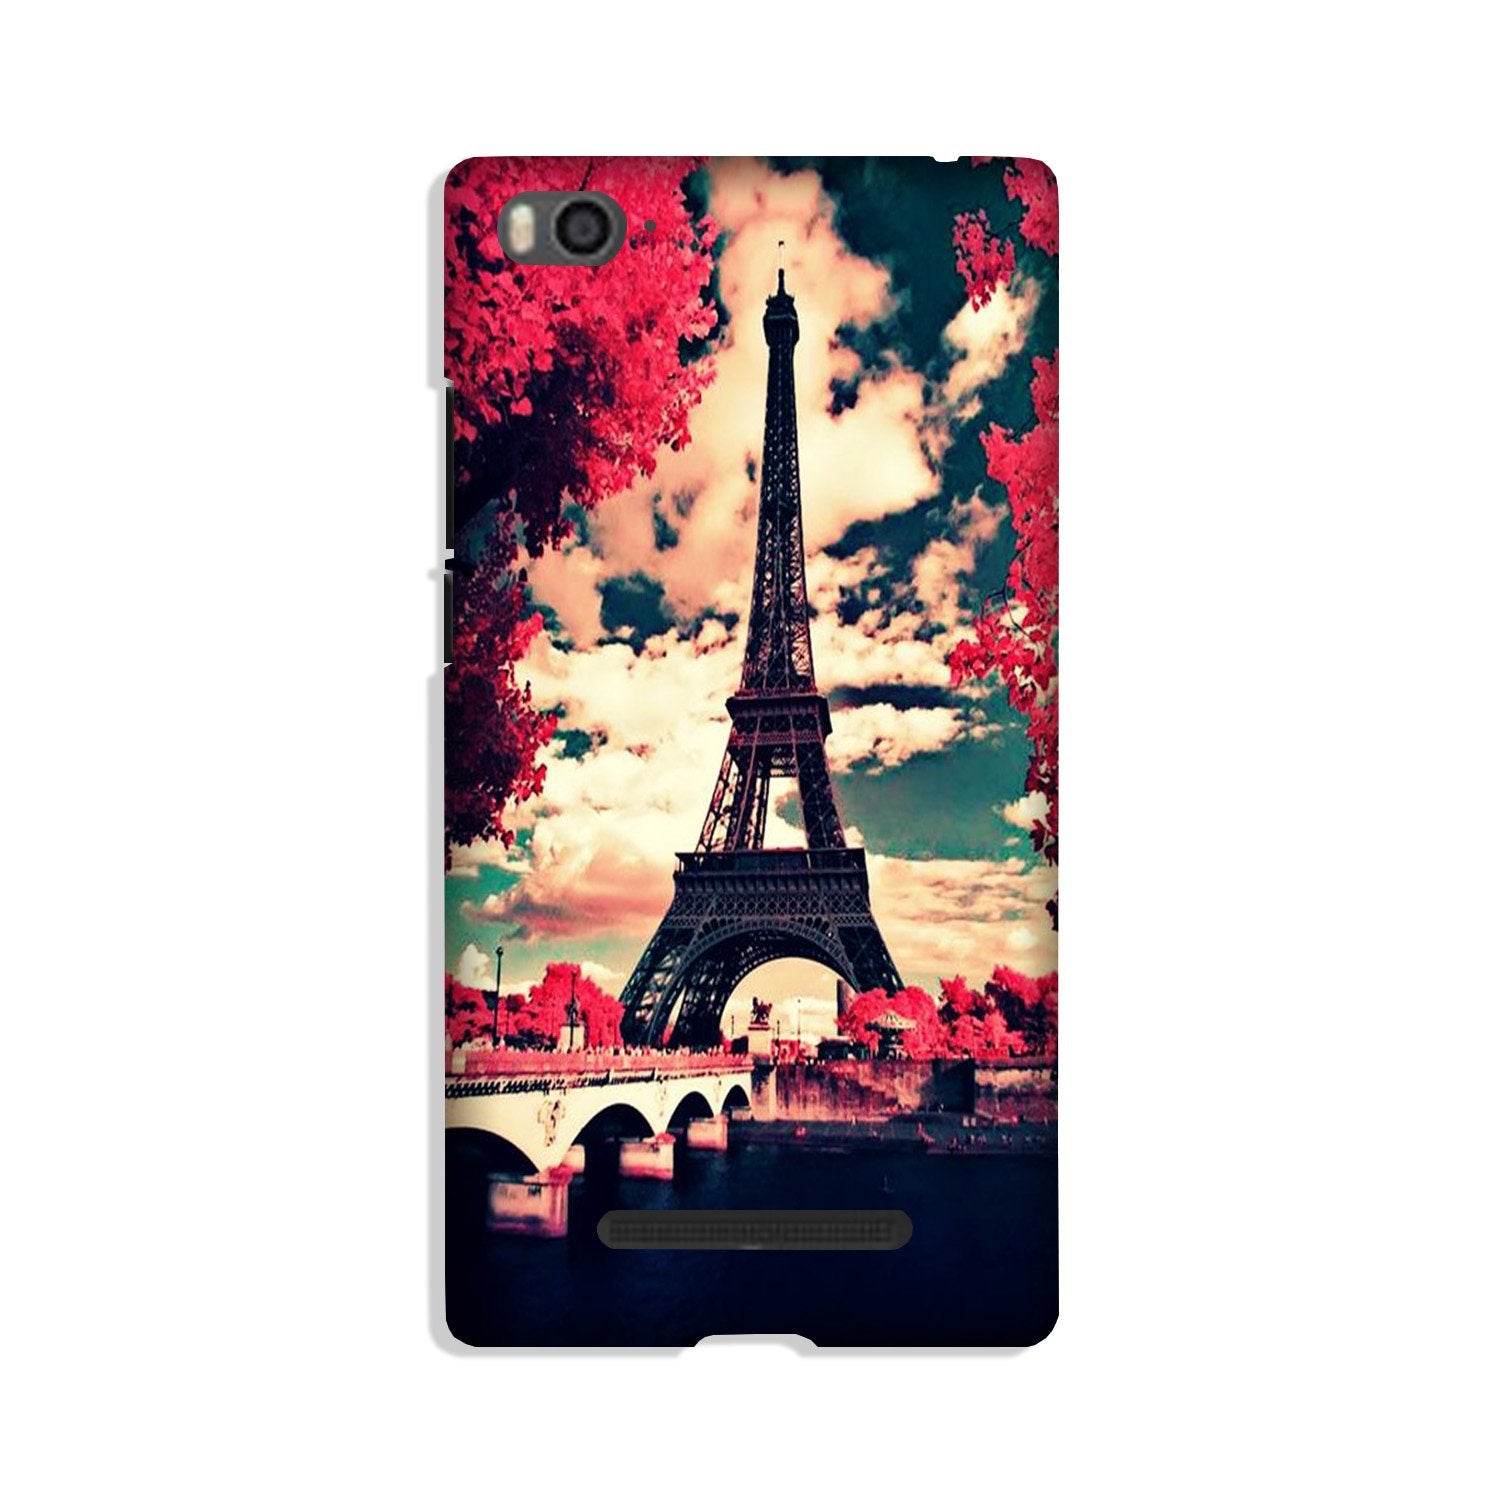 Eiffel Tower Case for Xiaomi Mi 4i (Design No. 212)